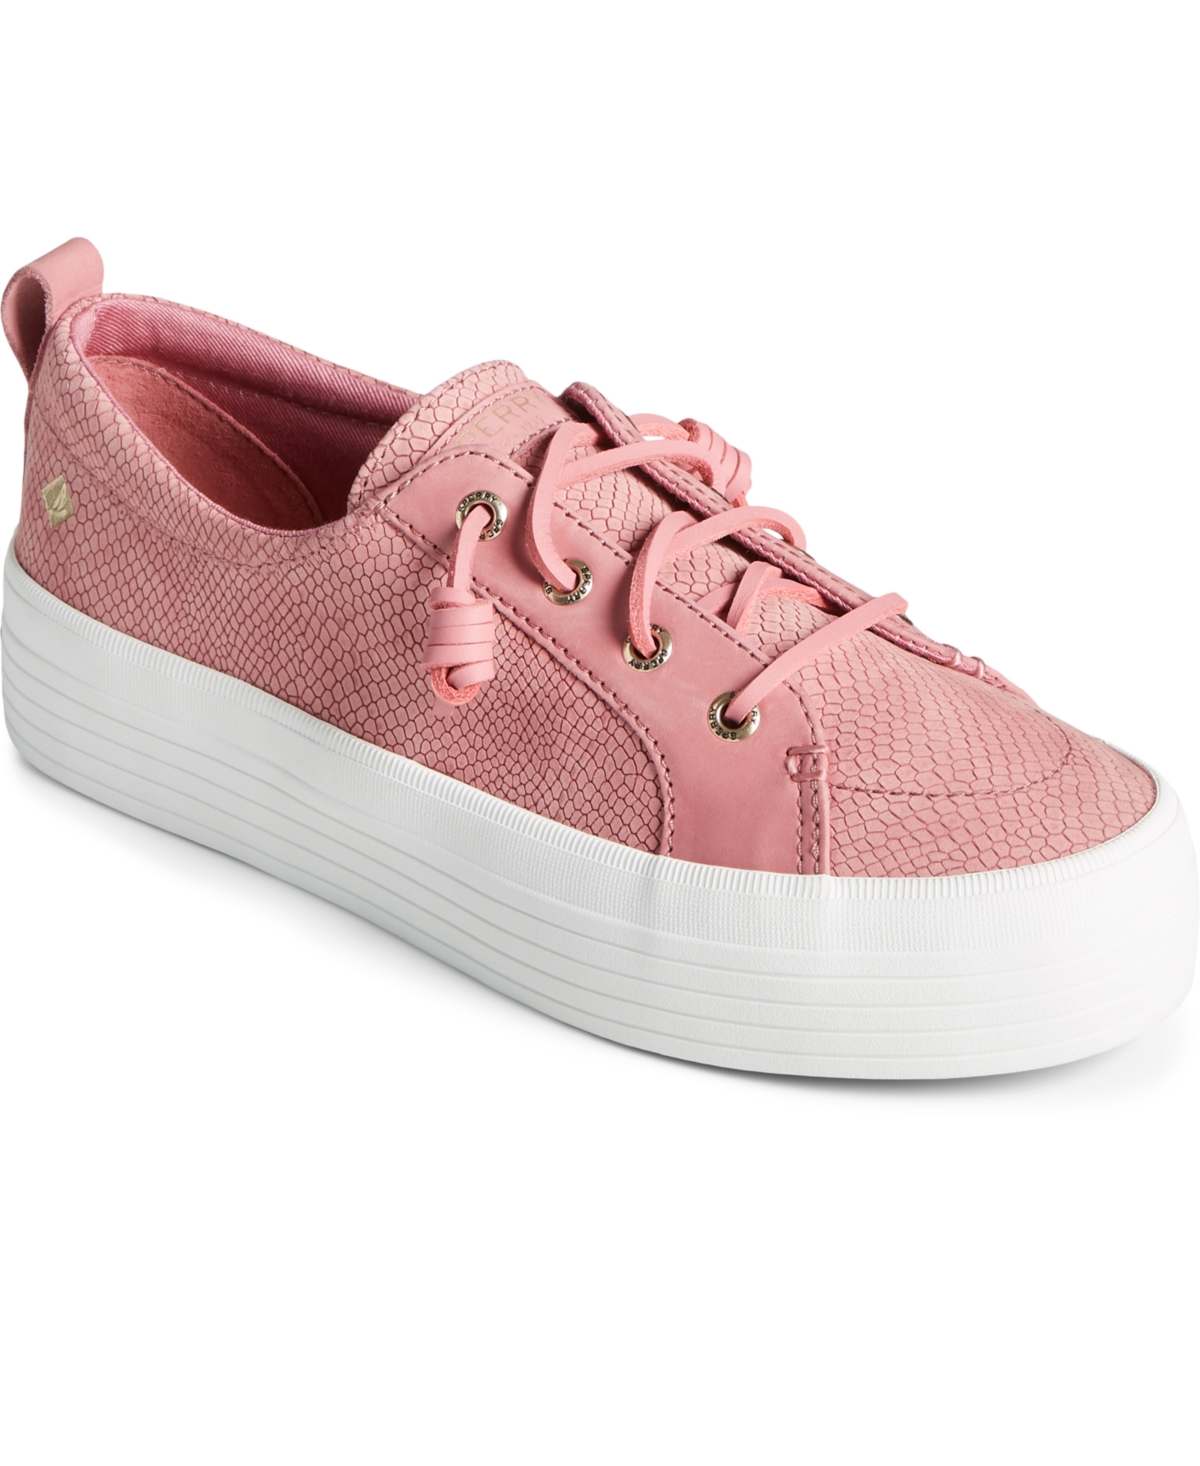 sperry-women-s-crest-vibe-platform-sneakers-women-s-shoes-in-pink